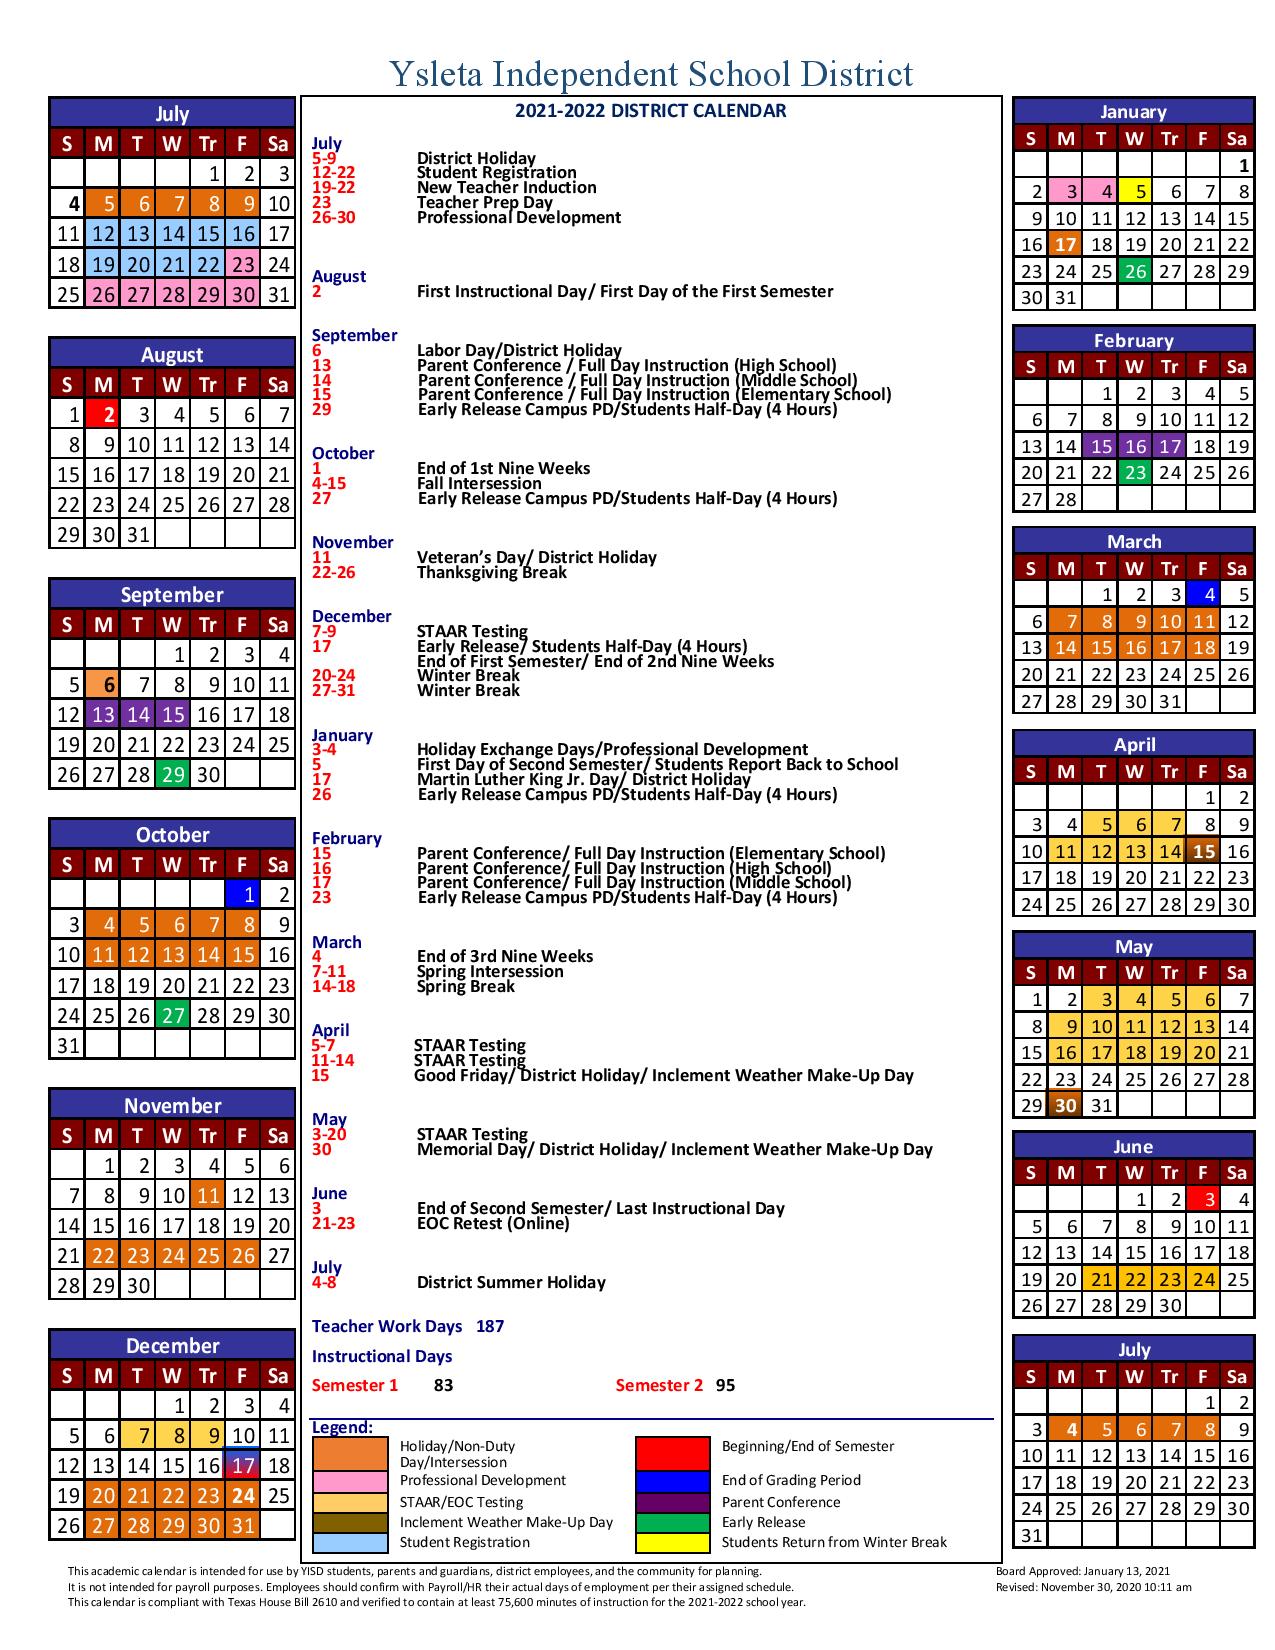 Ysleta Independent School District Calendar 2021 2022